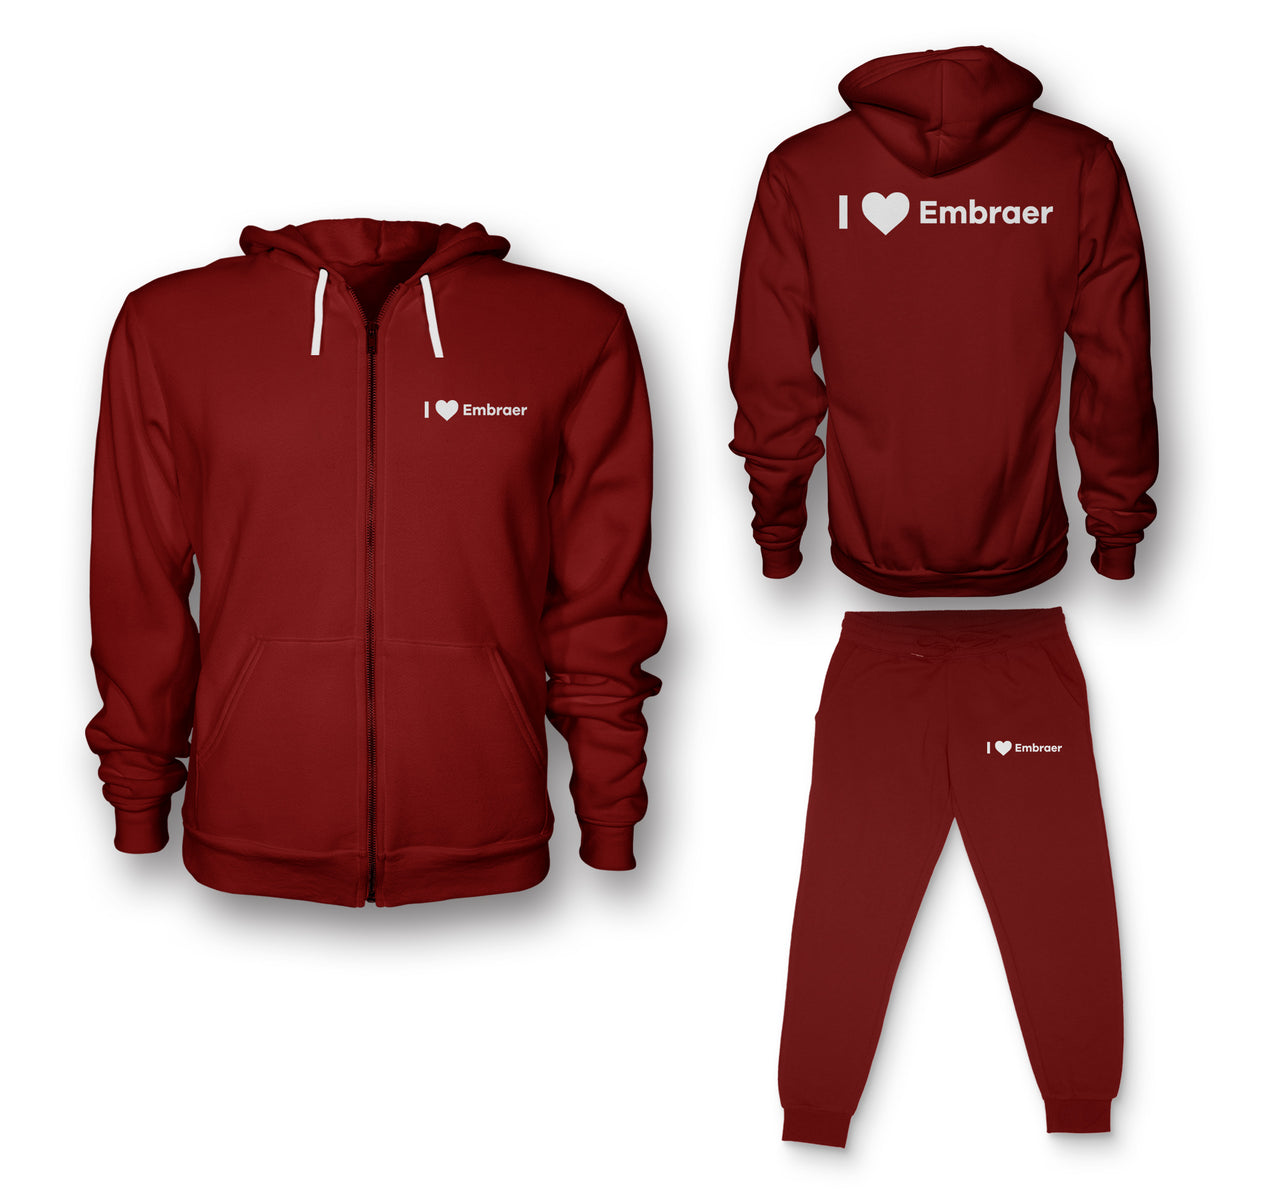 I Love Embraer Designed Zipped Hoodies & Sweatpants Set